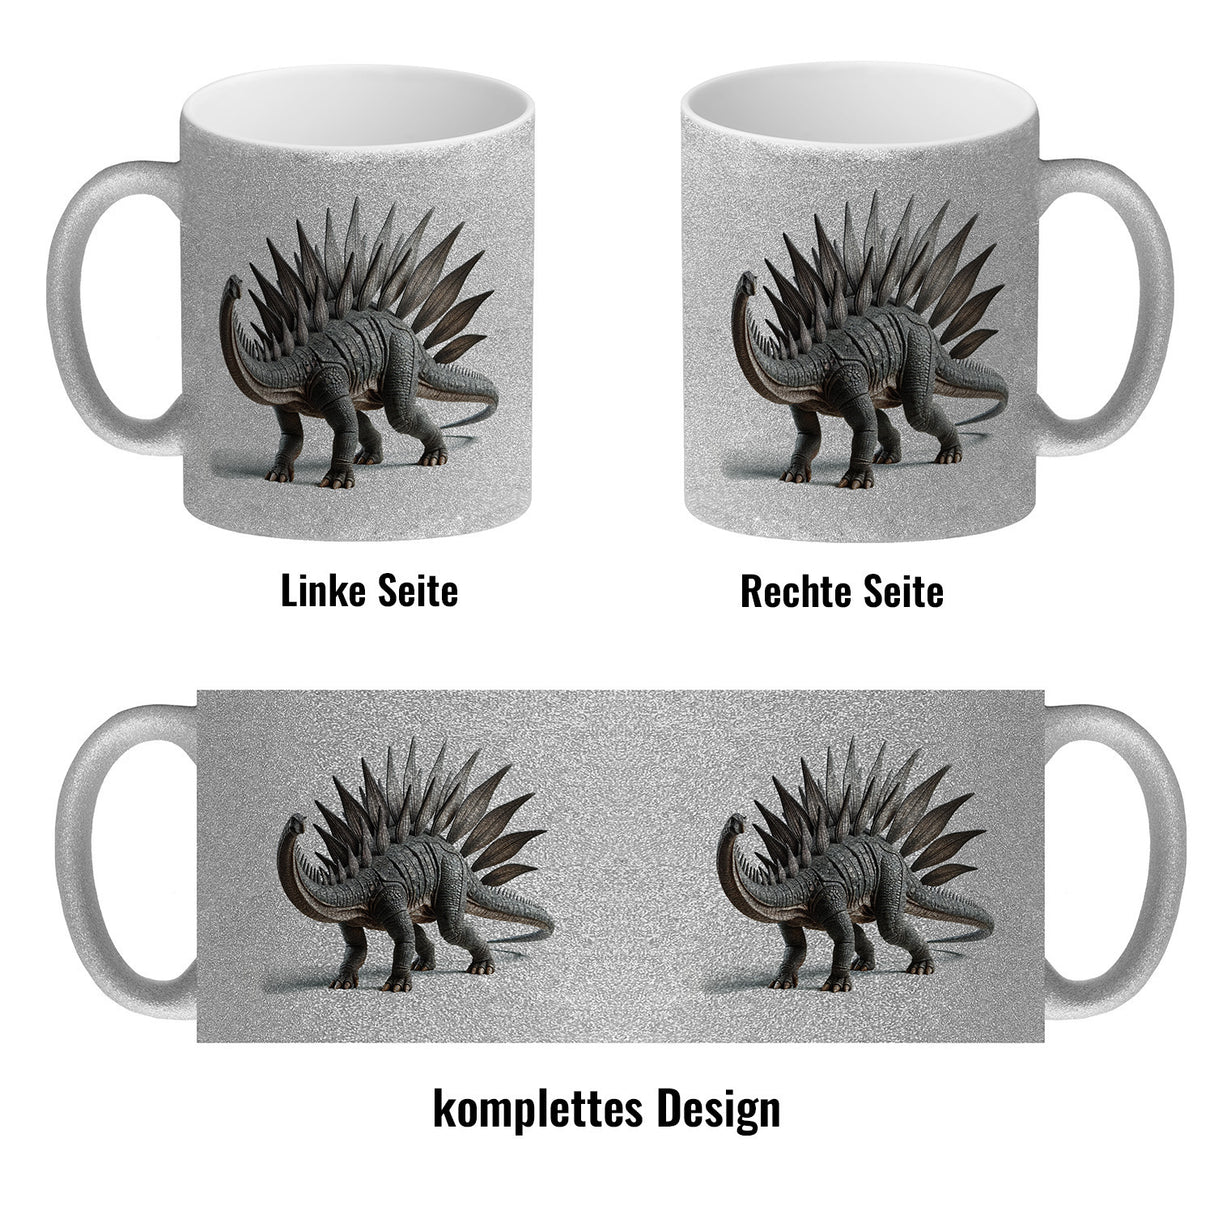 Stegosaurus Kaffeebecher